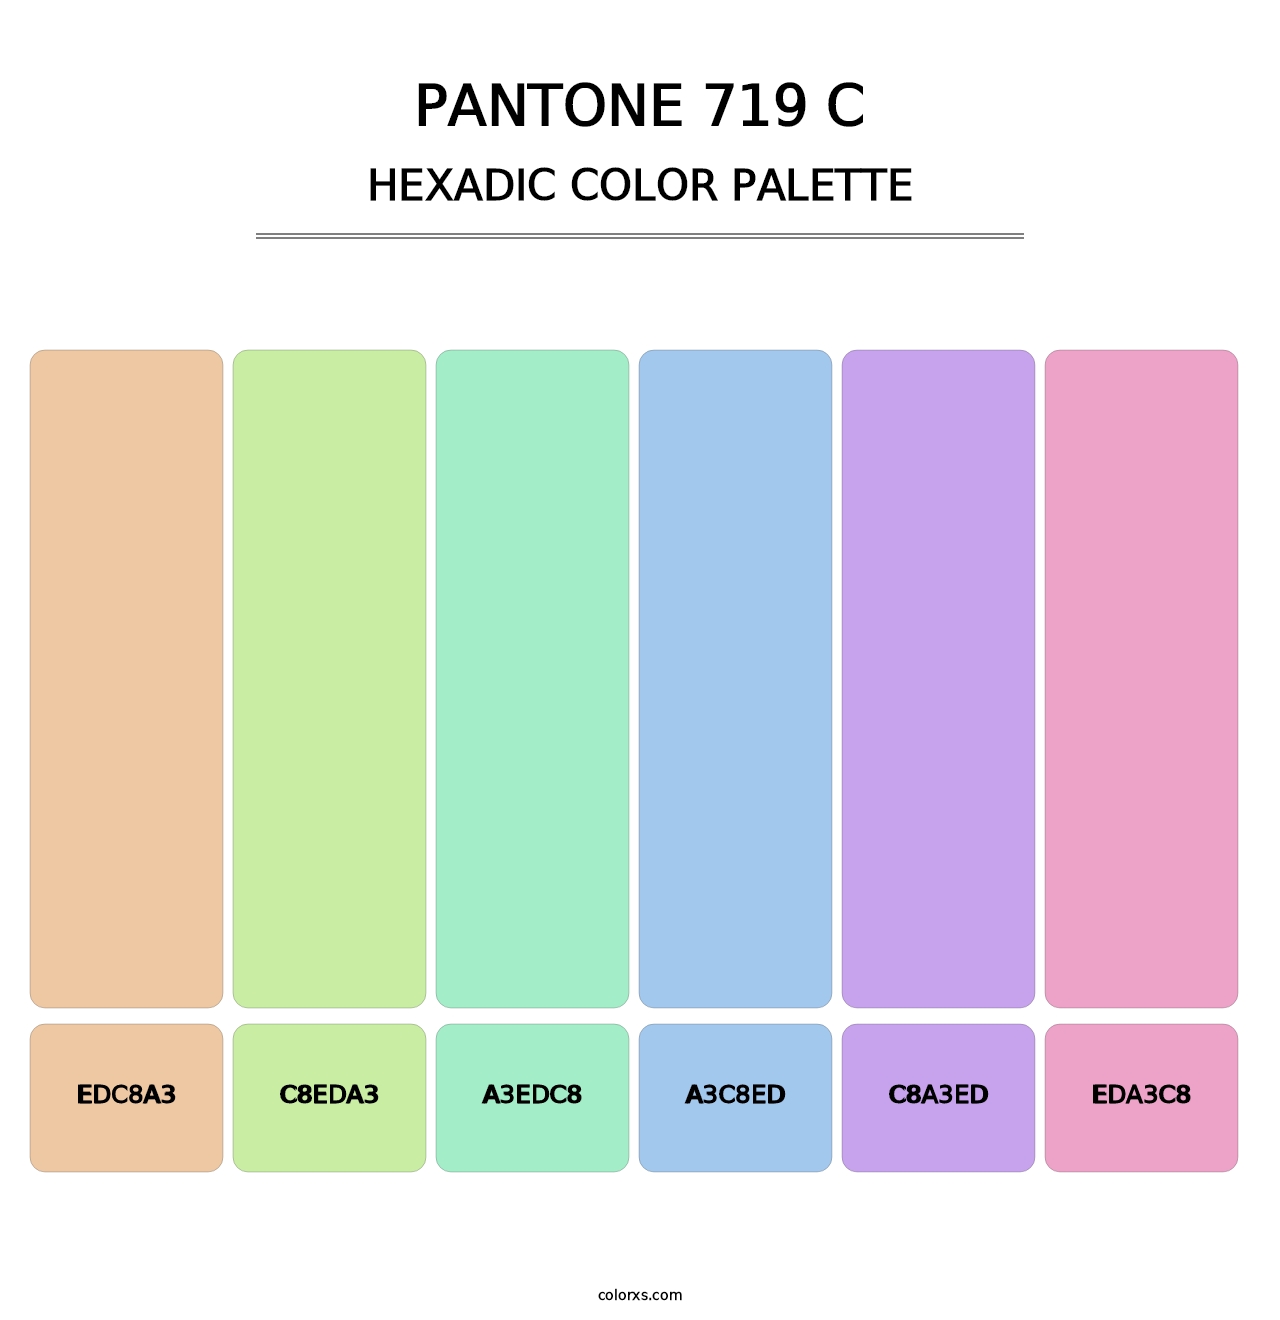 PANTONE 719 C - Hexadic Color Palette